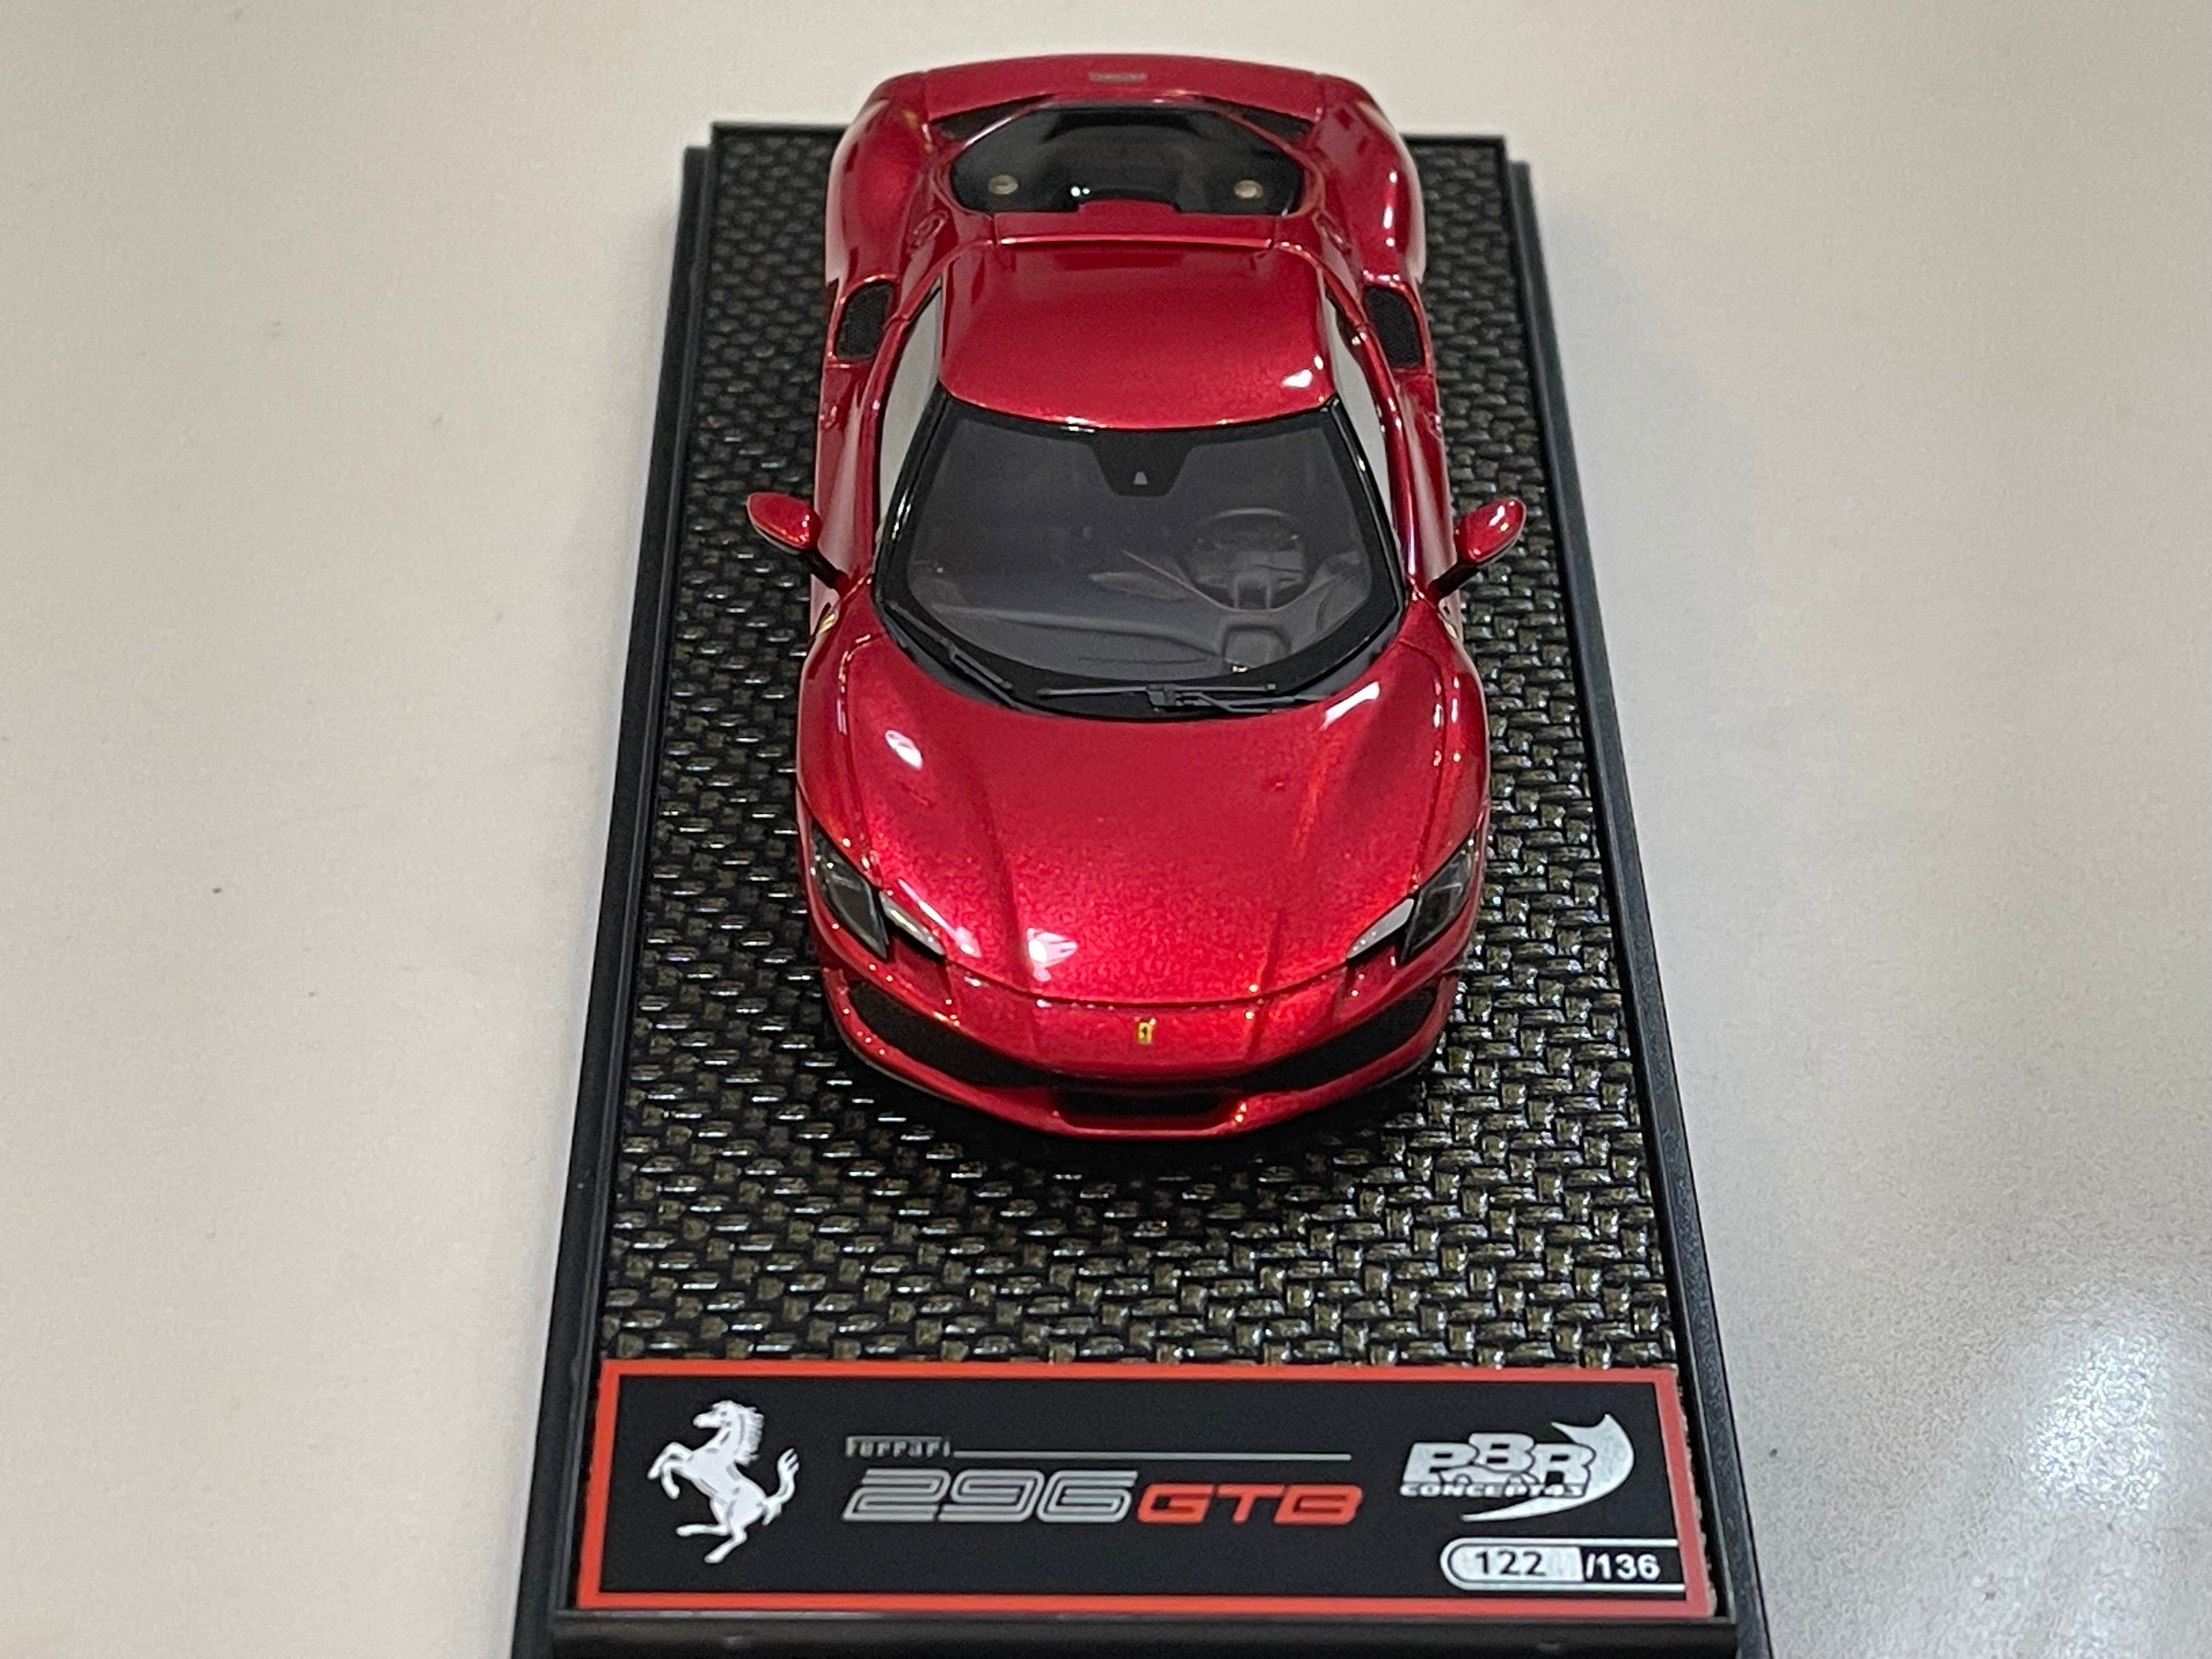 1:43 scale Ferrari 296 GTB model